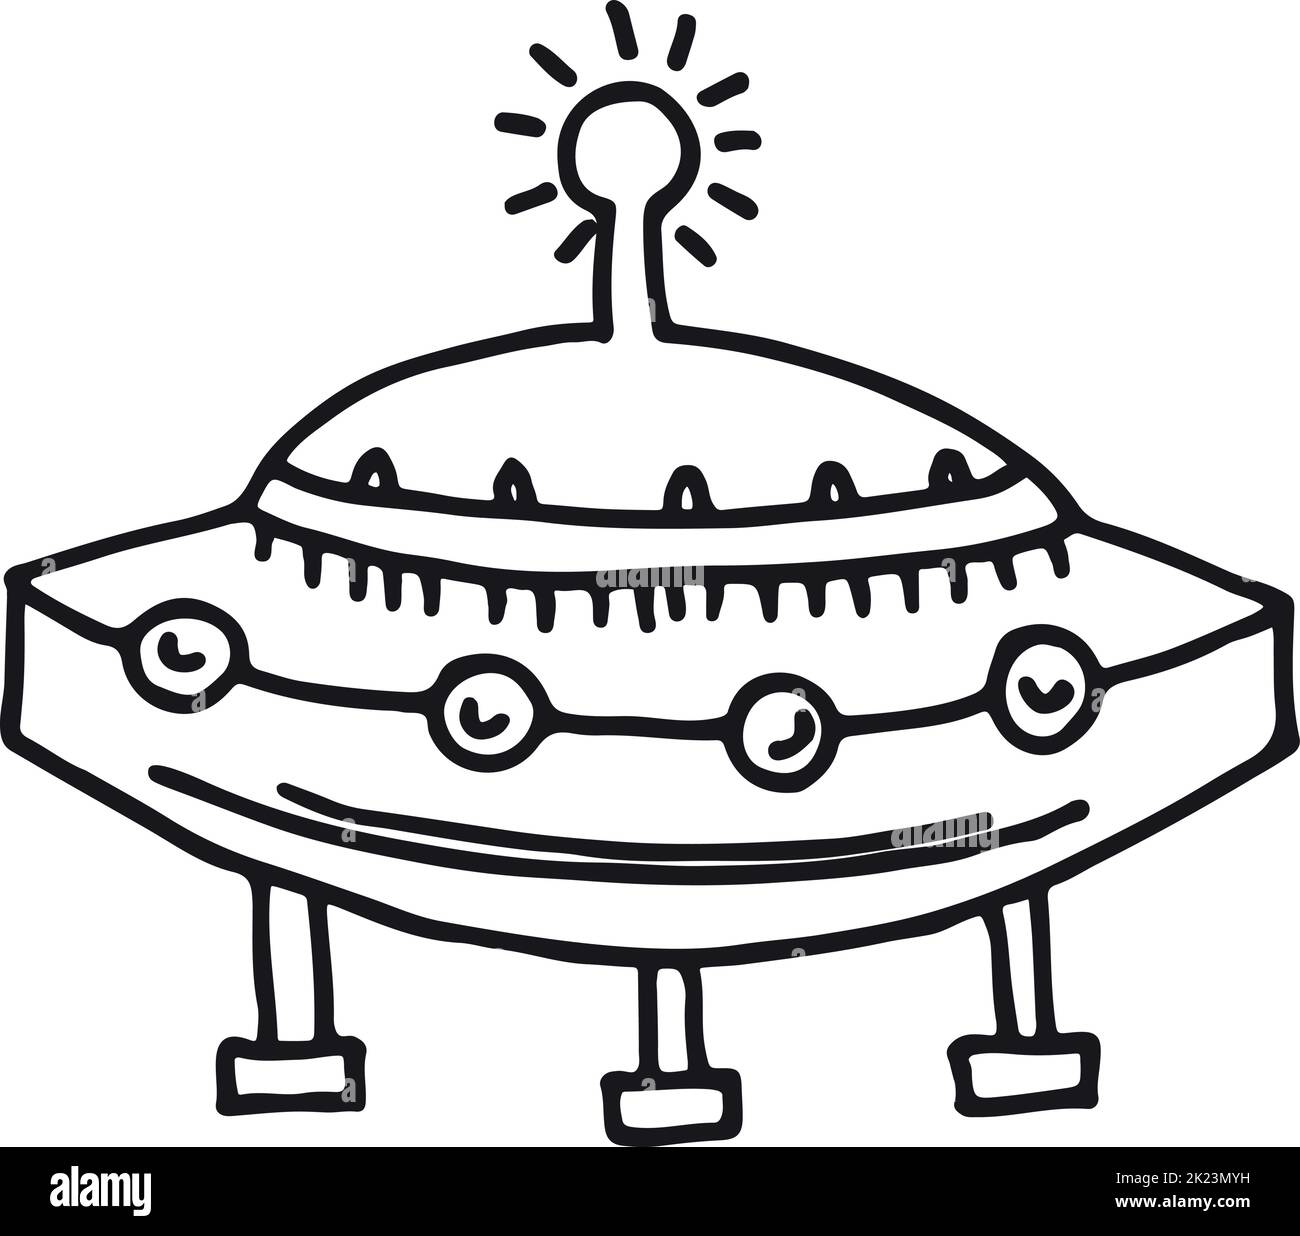 Ufo sketch. Hand drawn alien flying saucer Stock Vector